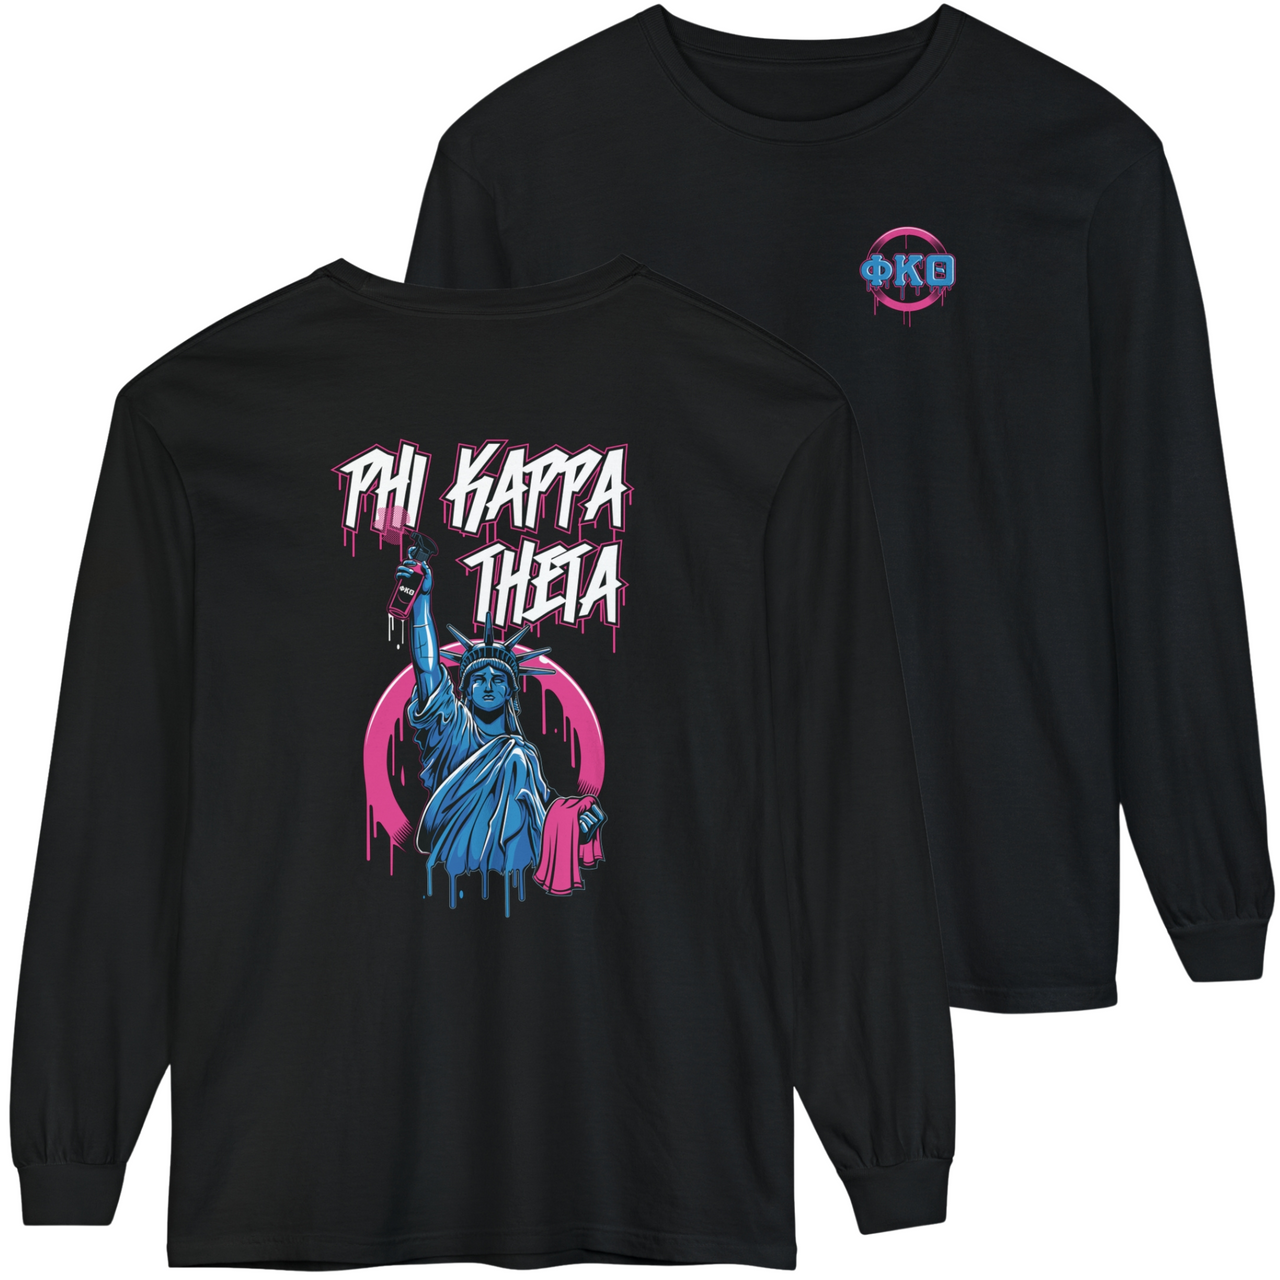 Phi Kappa Theta Graphic Long Sleeve | Liberty Rebel